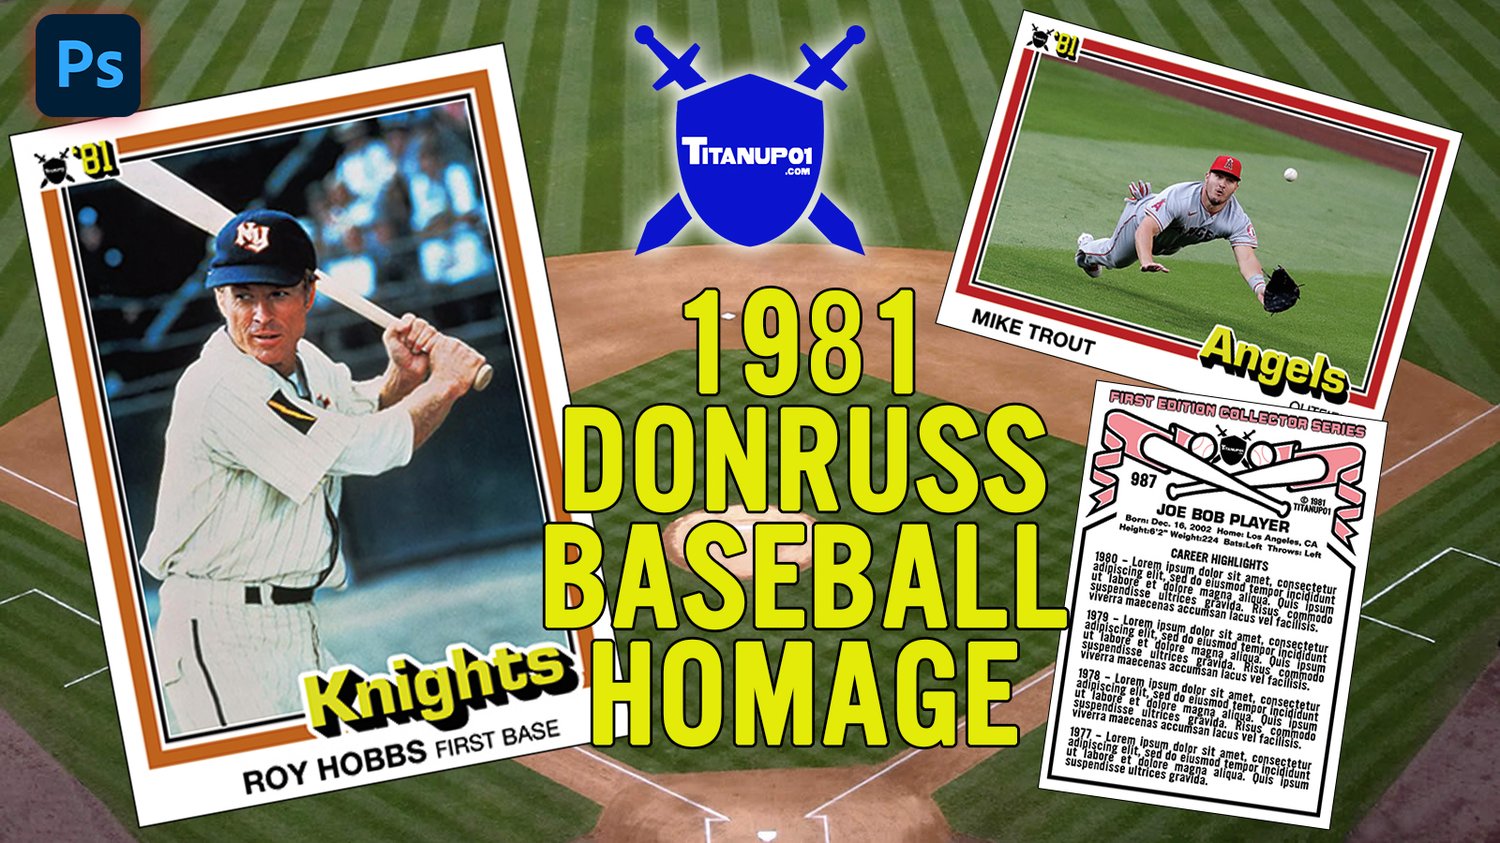 1981 Donruss Baseball Homage Photoshop PSD Templates